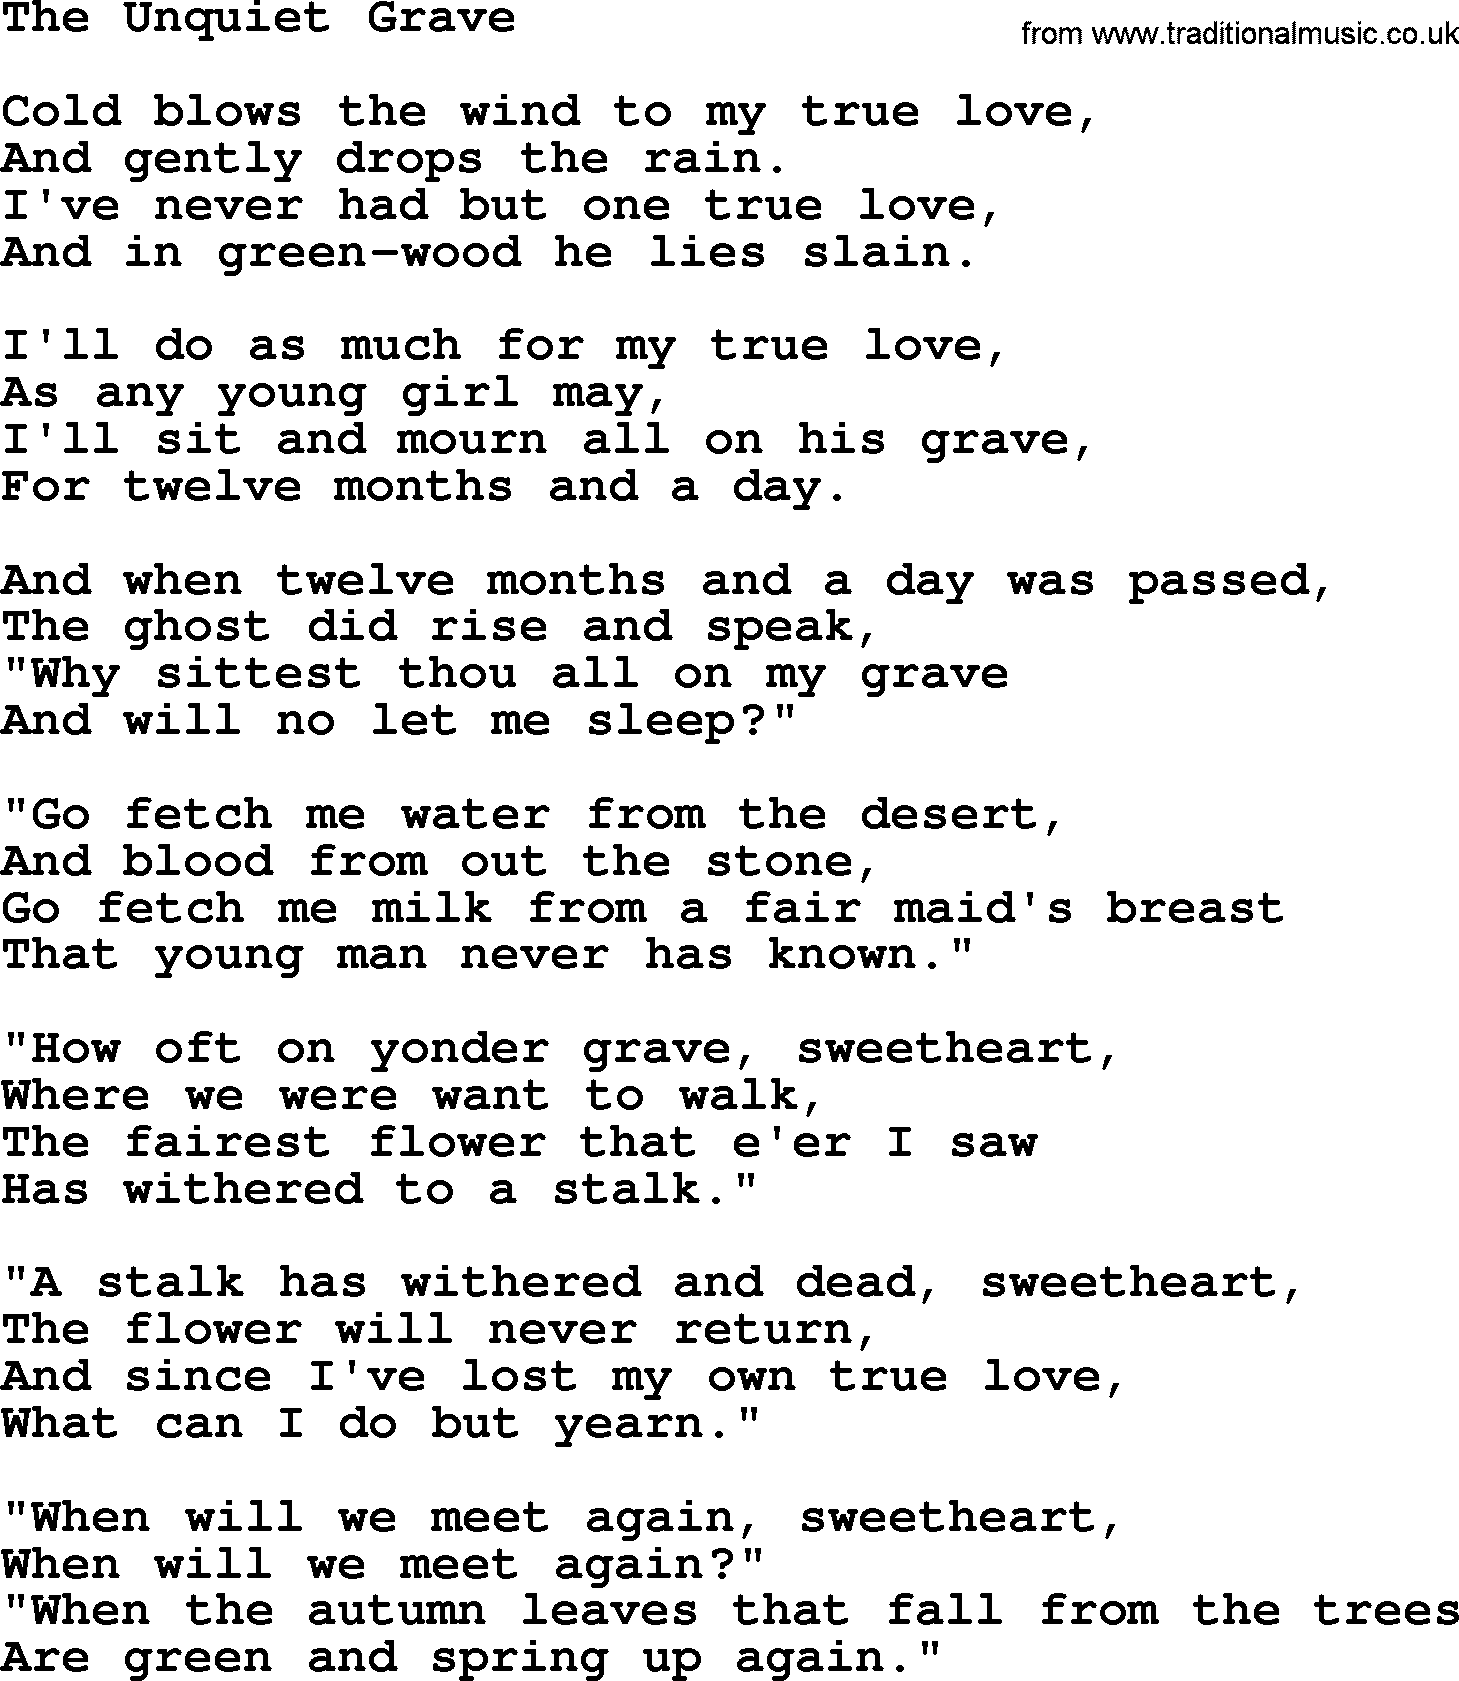 Joan Baez song The Unquiet Grave, lyrics